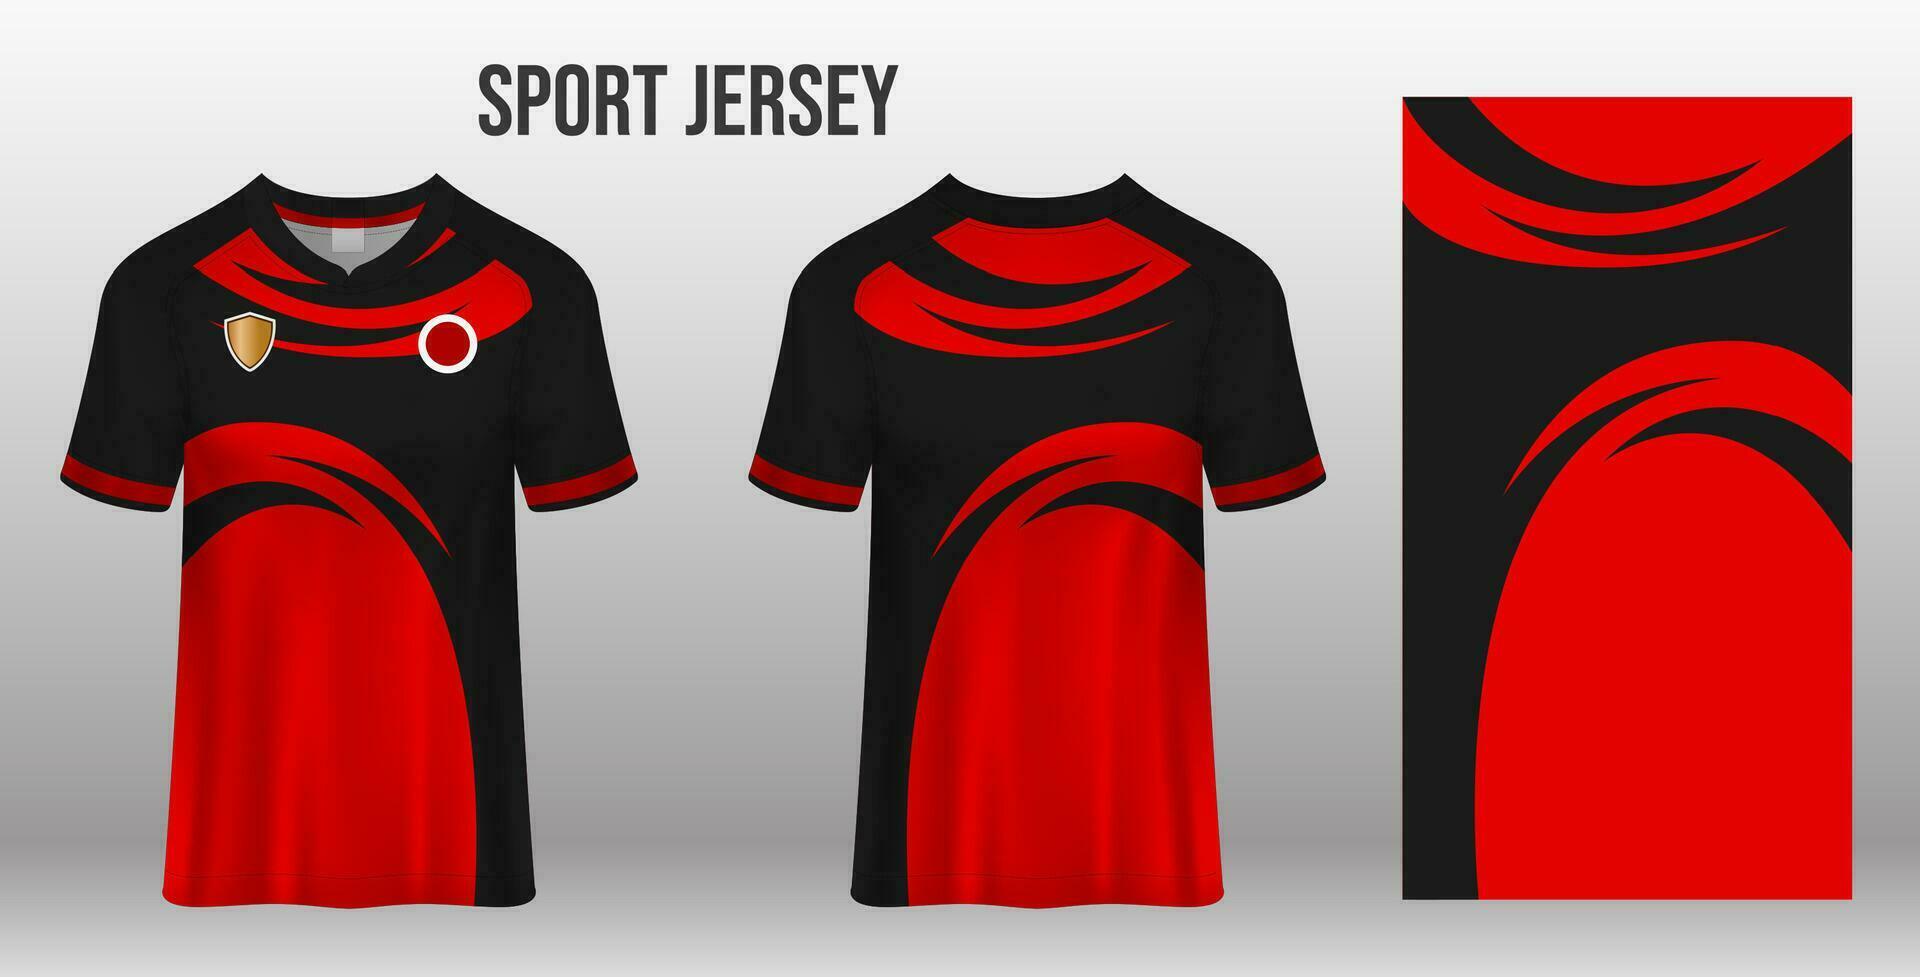 Sport jersey design fabric textile template vector